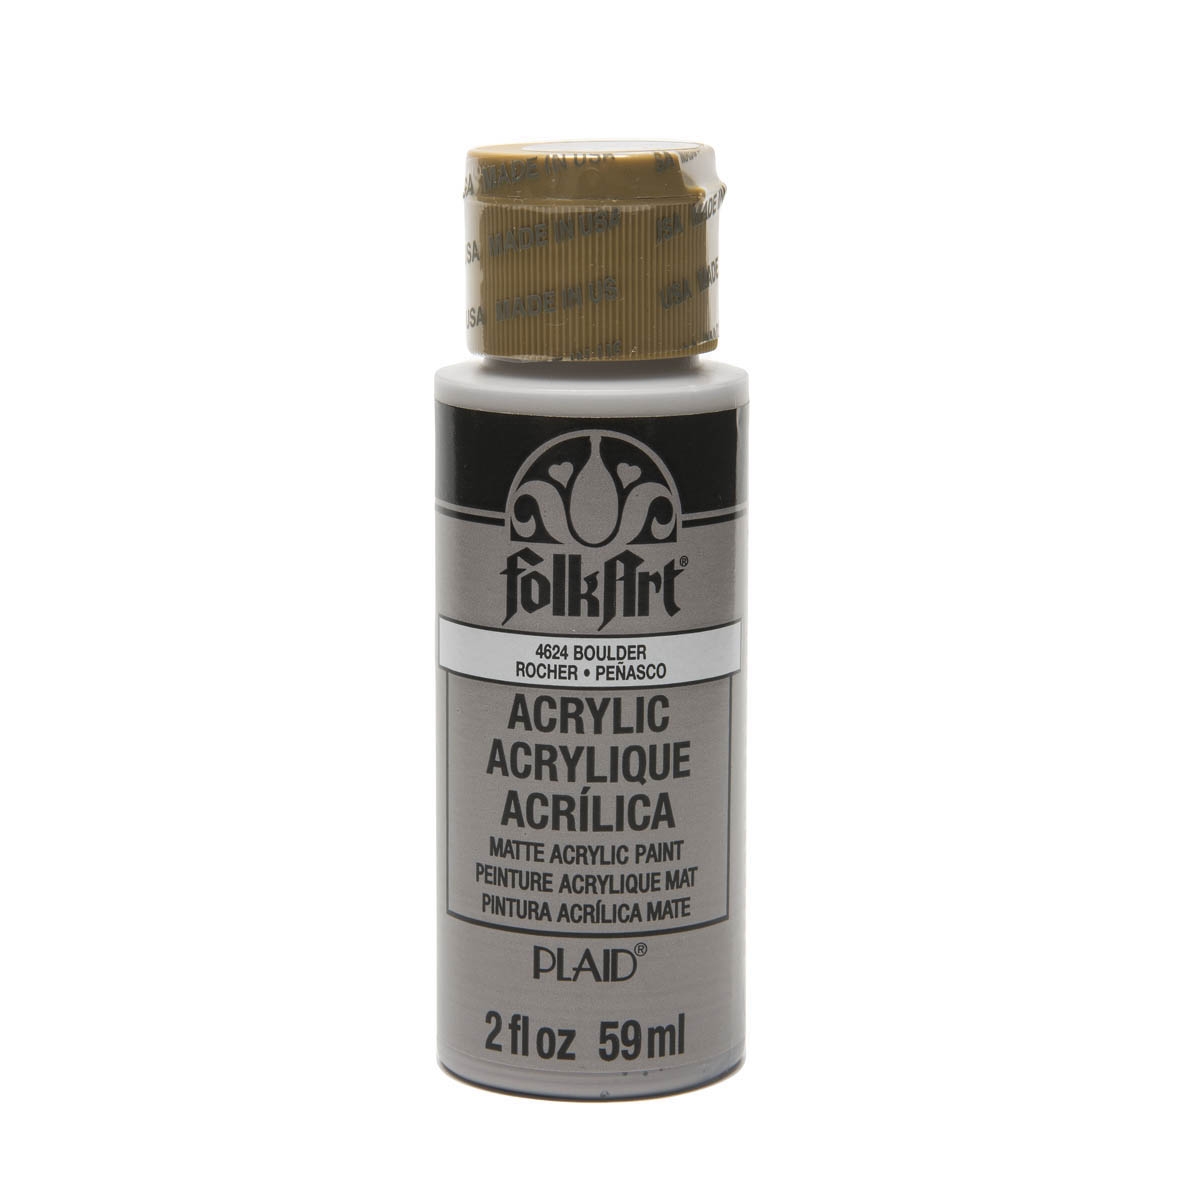 FolkArt ® Acrylic Colors - Boulder, 2 oz. - 4624